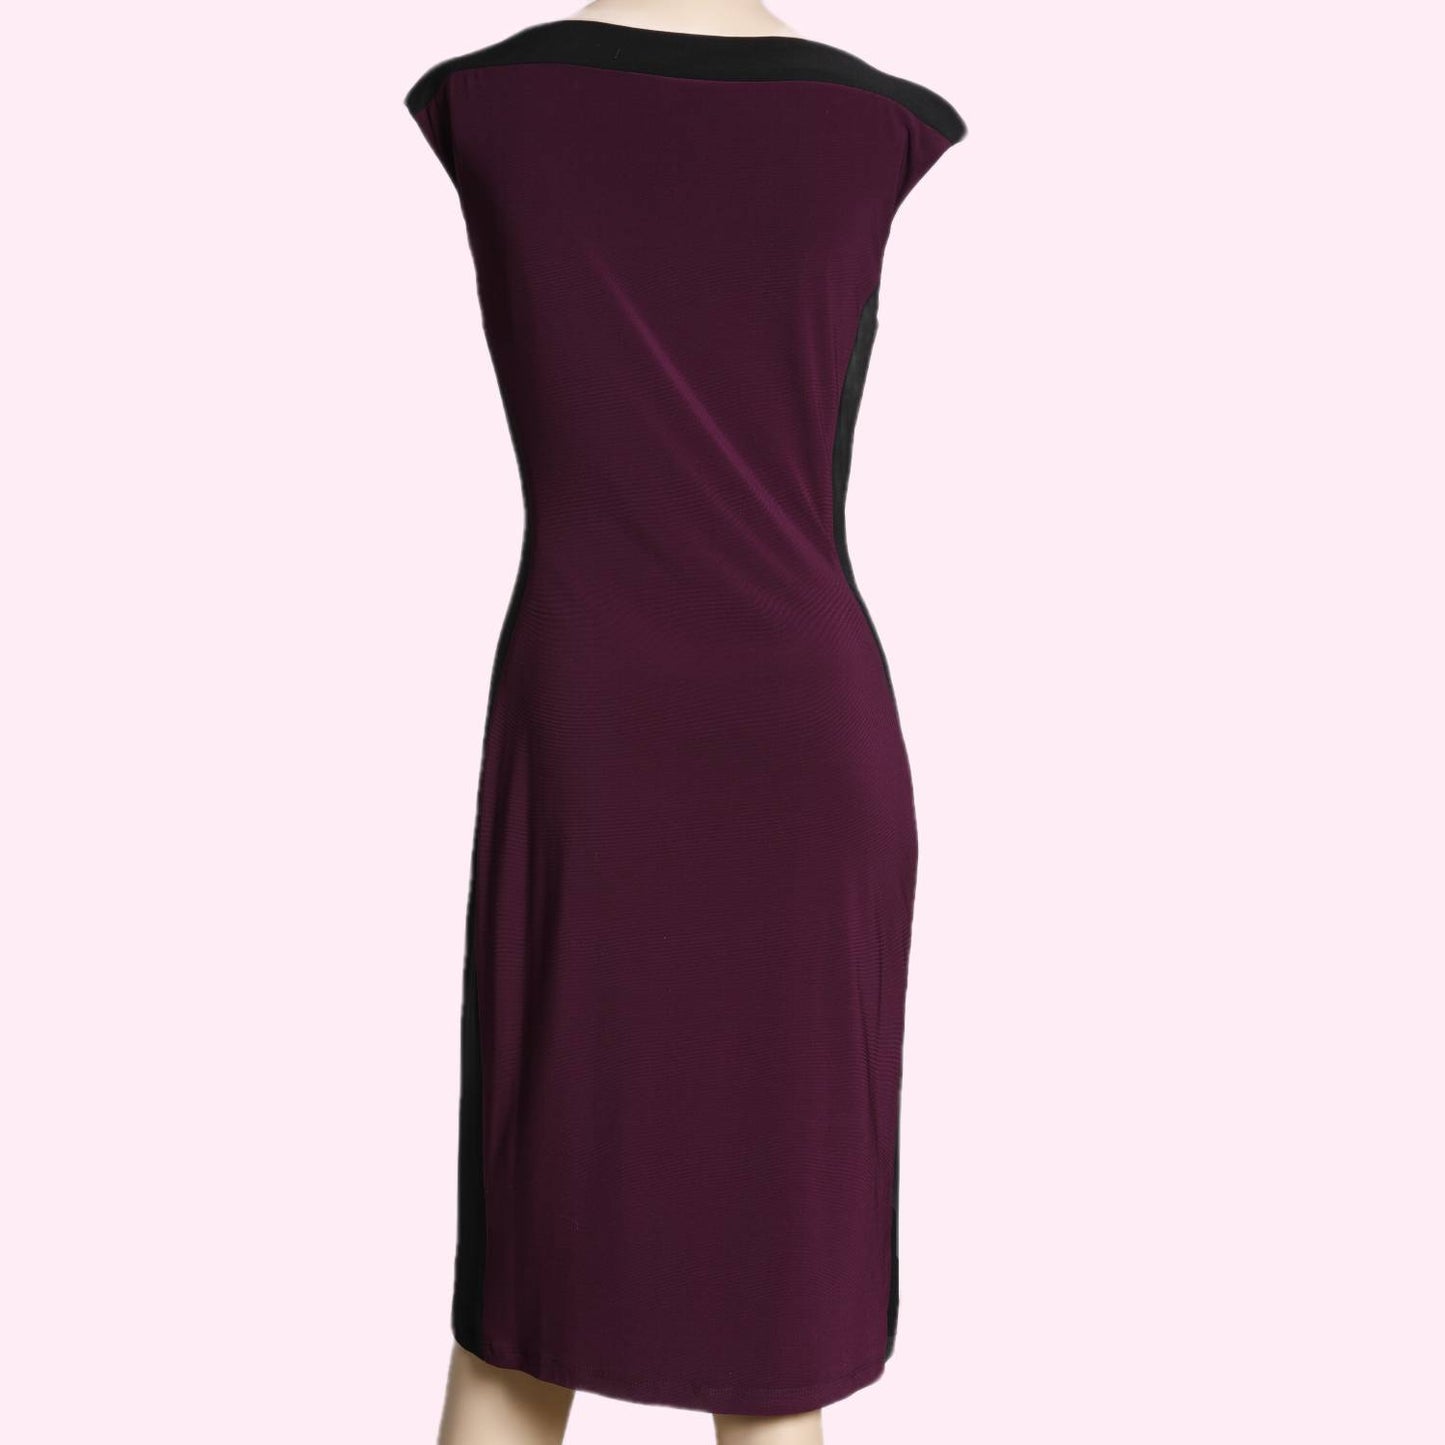 RALPH LAUREN Purple and Black Short Sleeve Dress